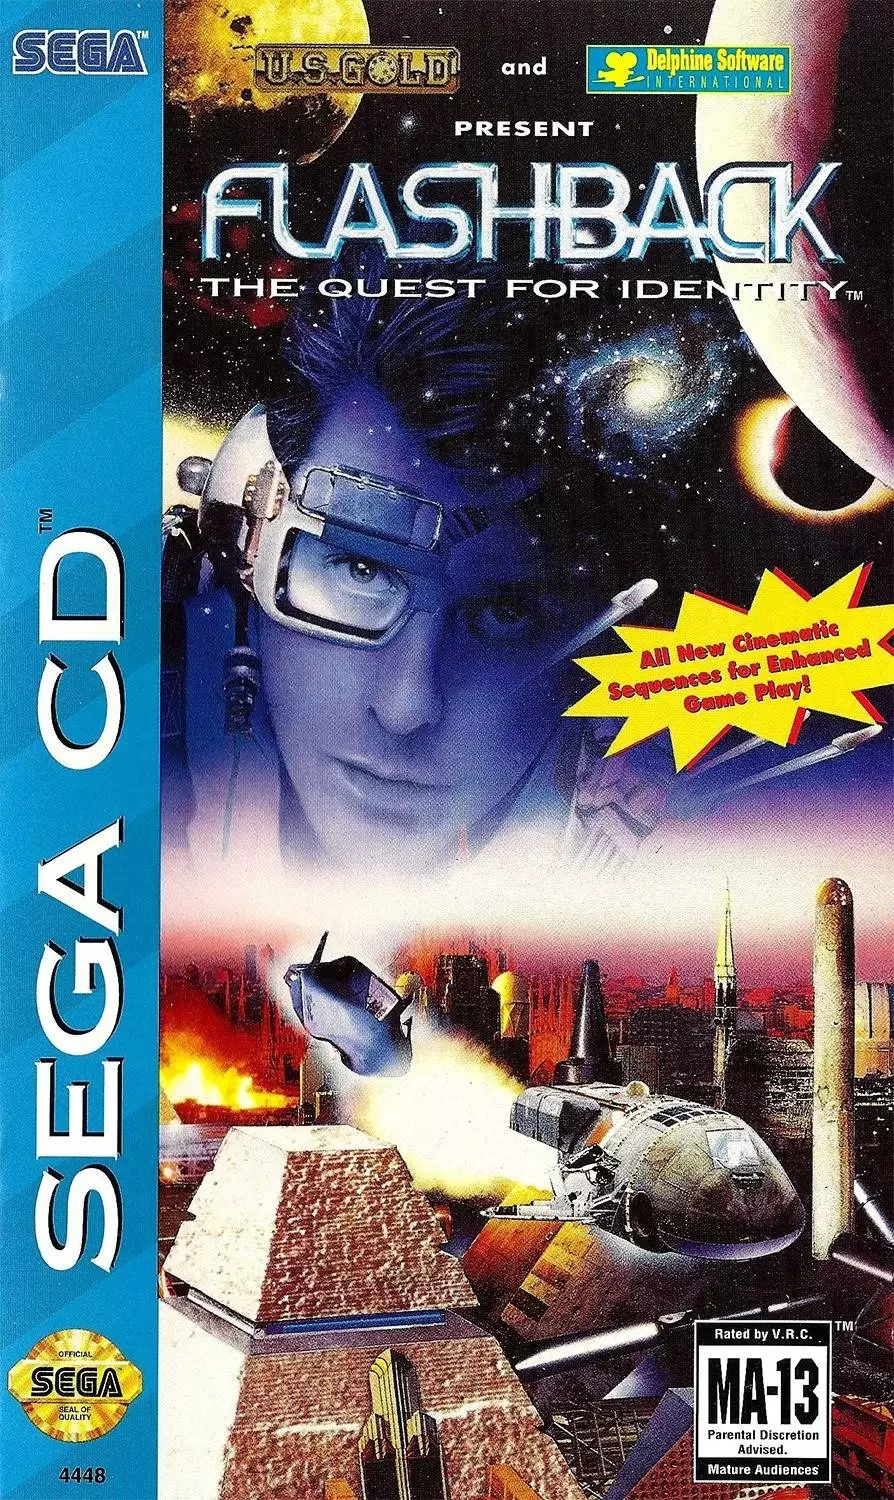 SEGA Mega CD Games - Flashback: The Quest for Identity